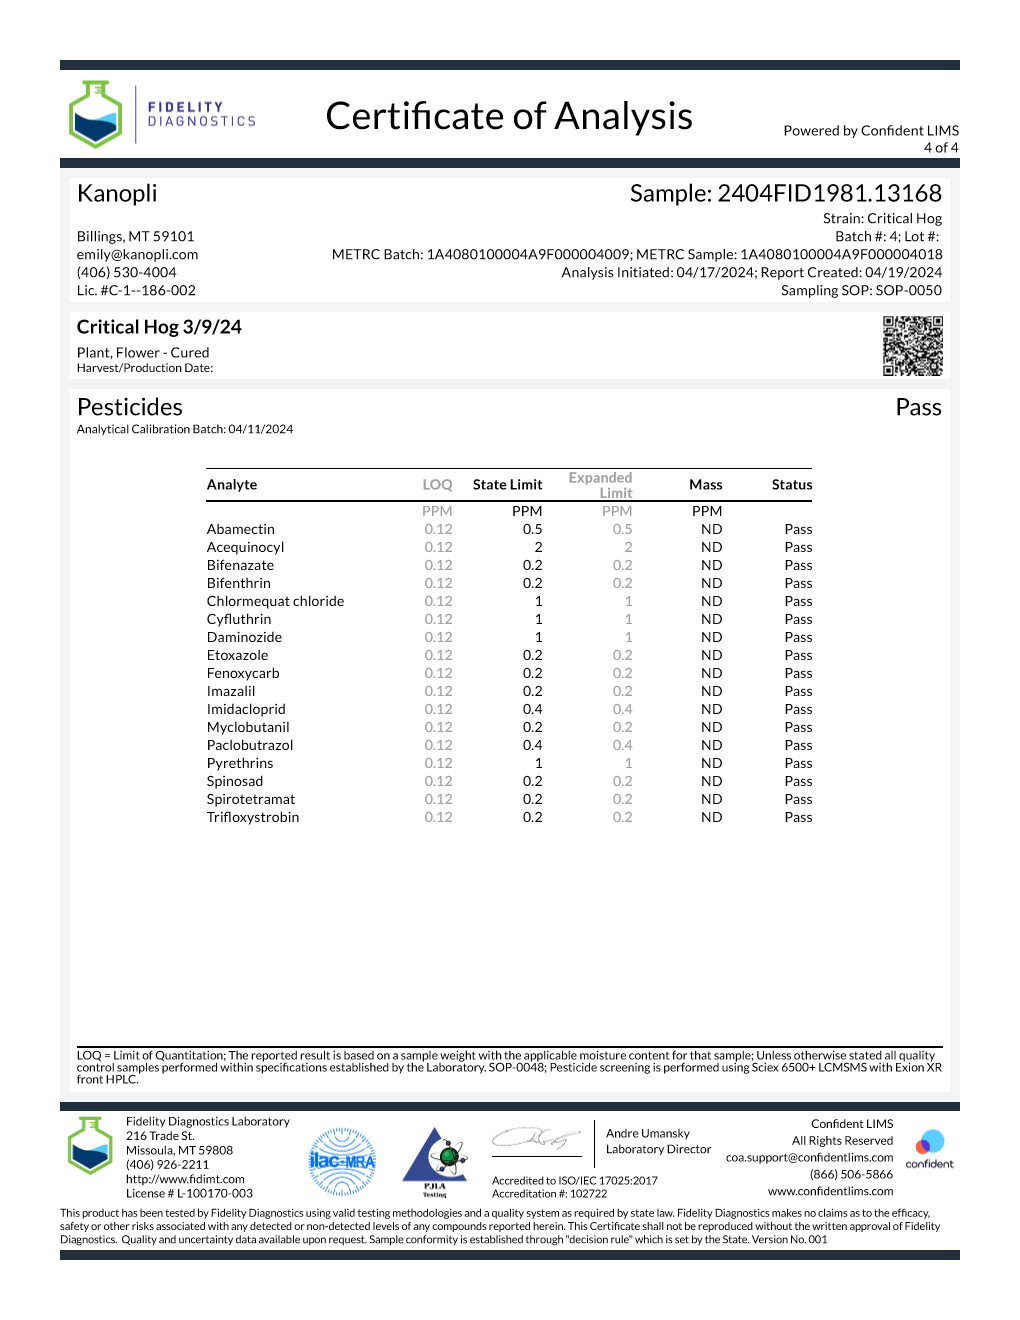 Critical Hog - Indica 15.14% THC (March 2024) MEDICAL